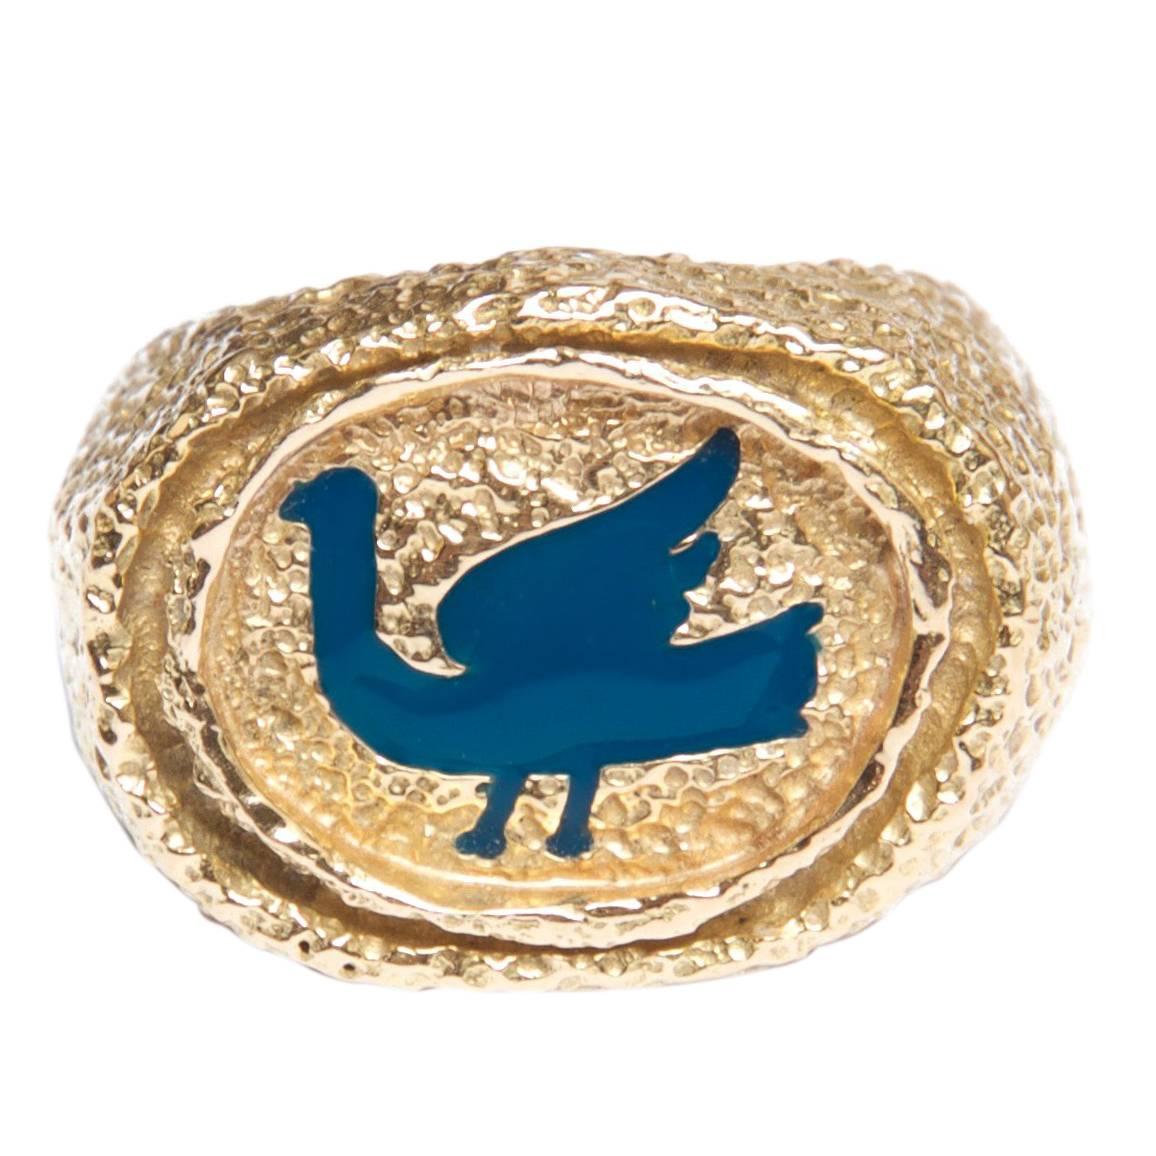 1963 Georges Braque Blue Enamel Gold Procris Ring